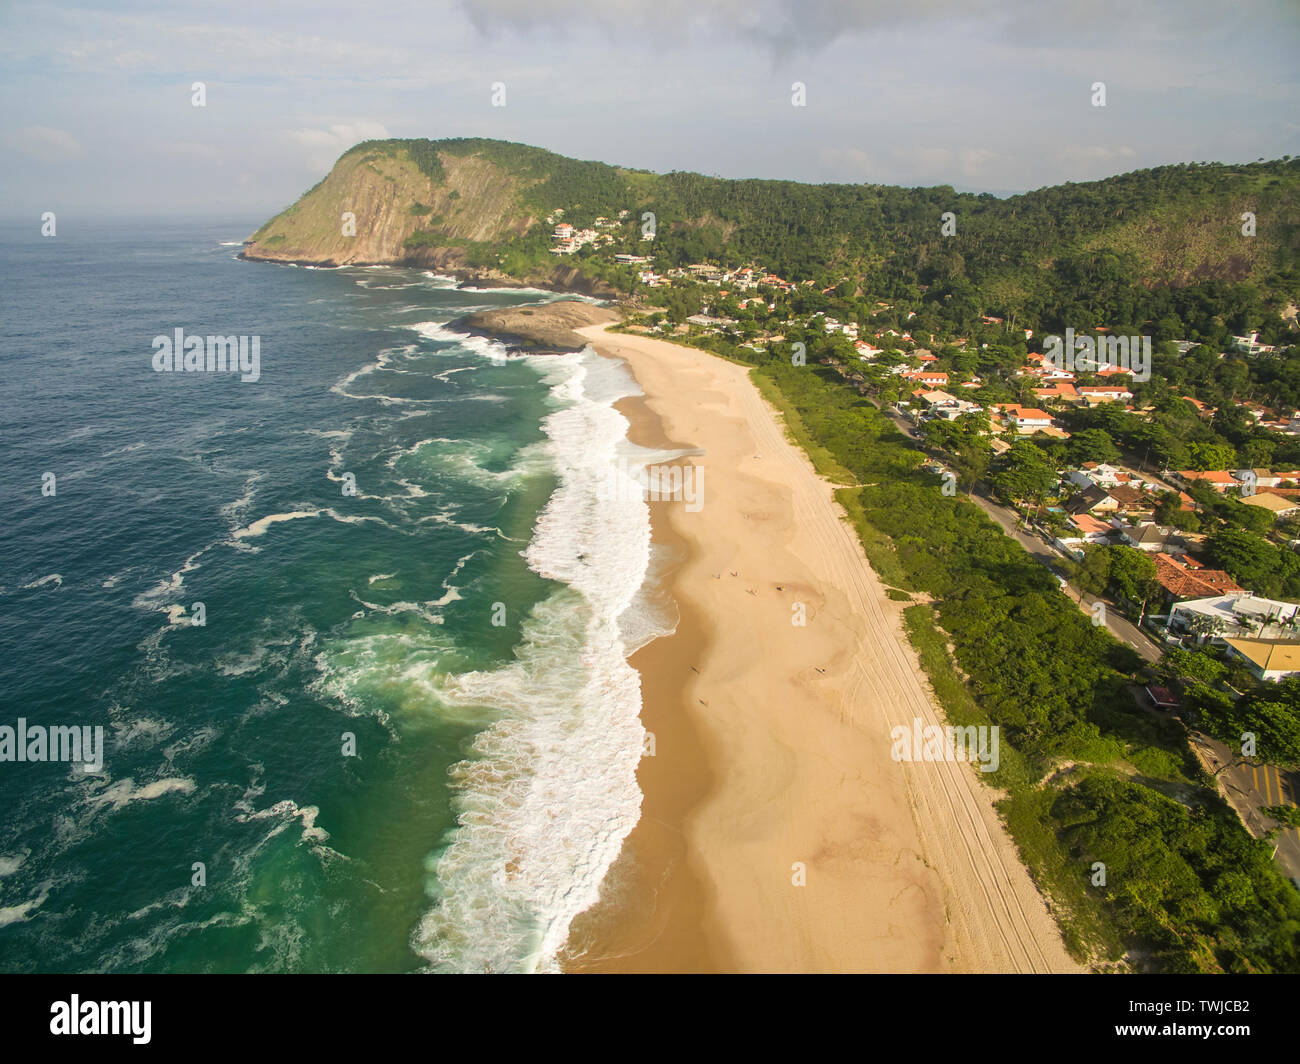 Stone beach and mountain. Beach paradise. Itacoatiara beach. The city of Niteroi, State of Rio de Janeiro Brazil, South America. Stock Photo